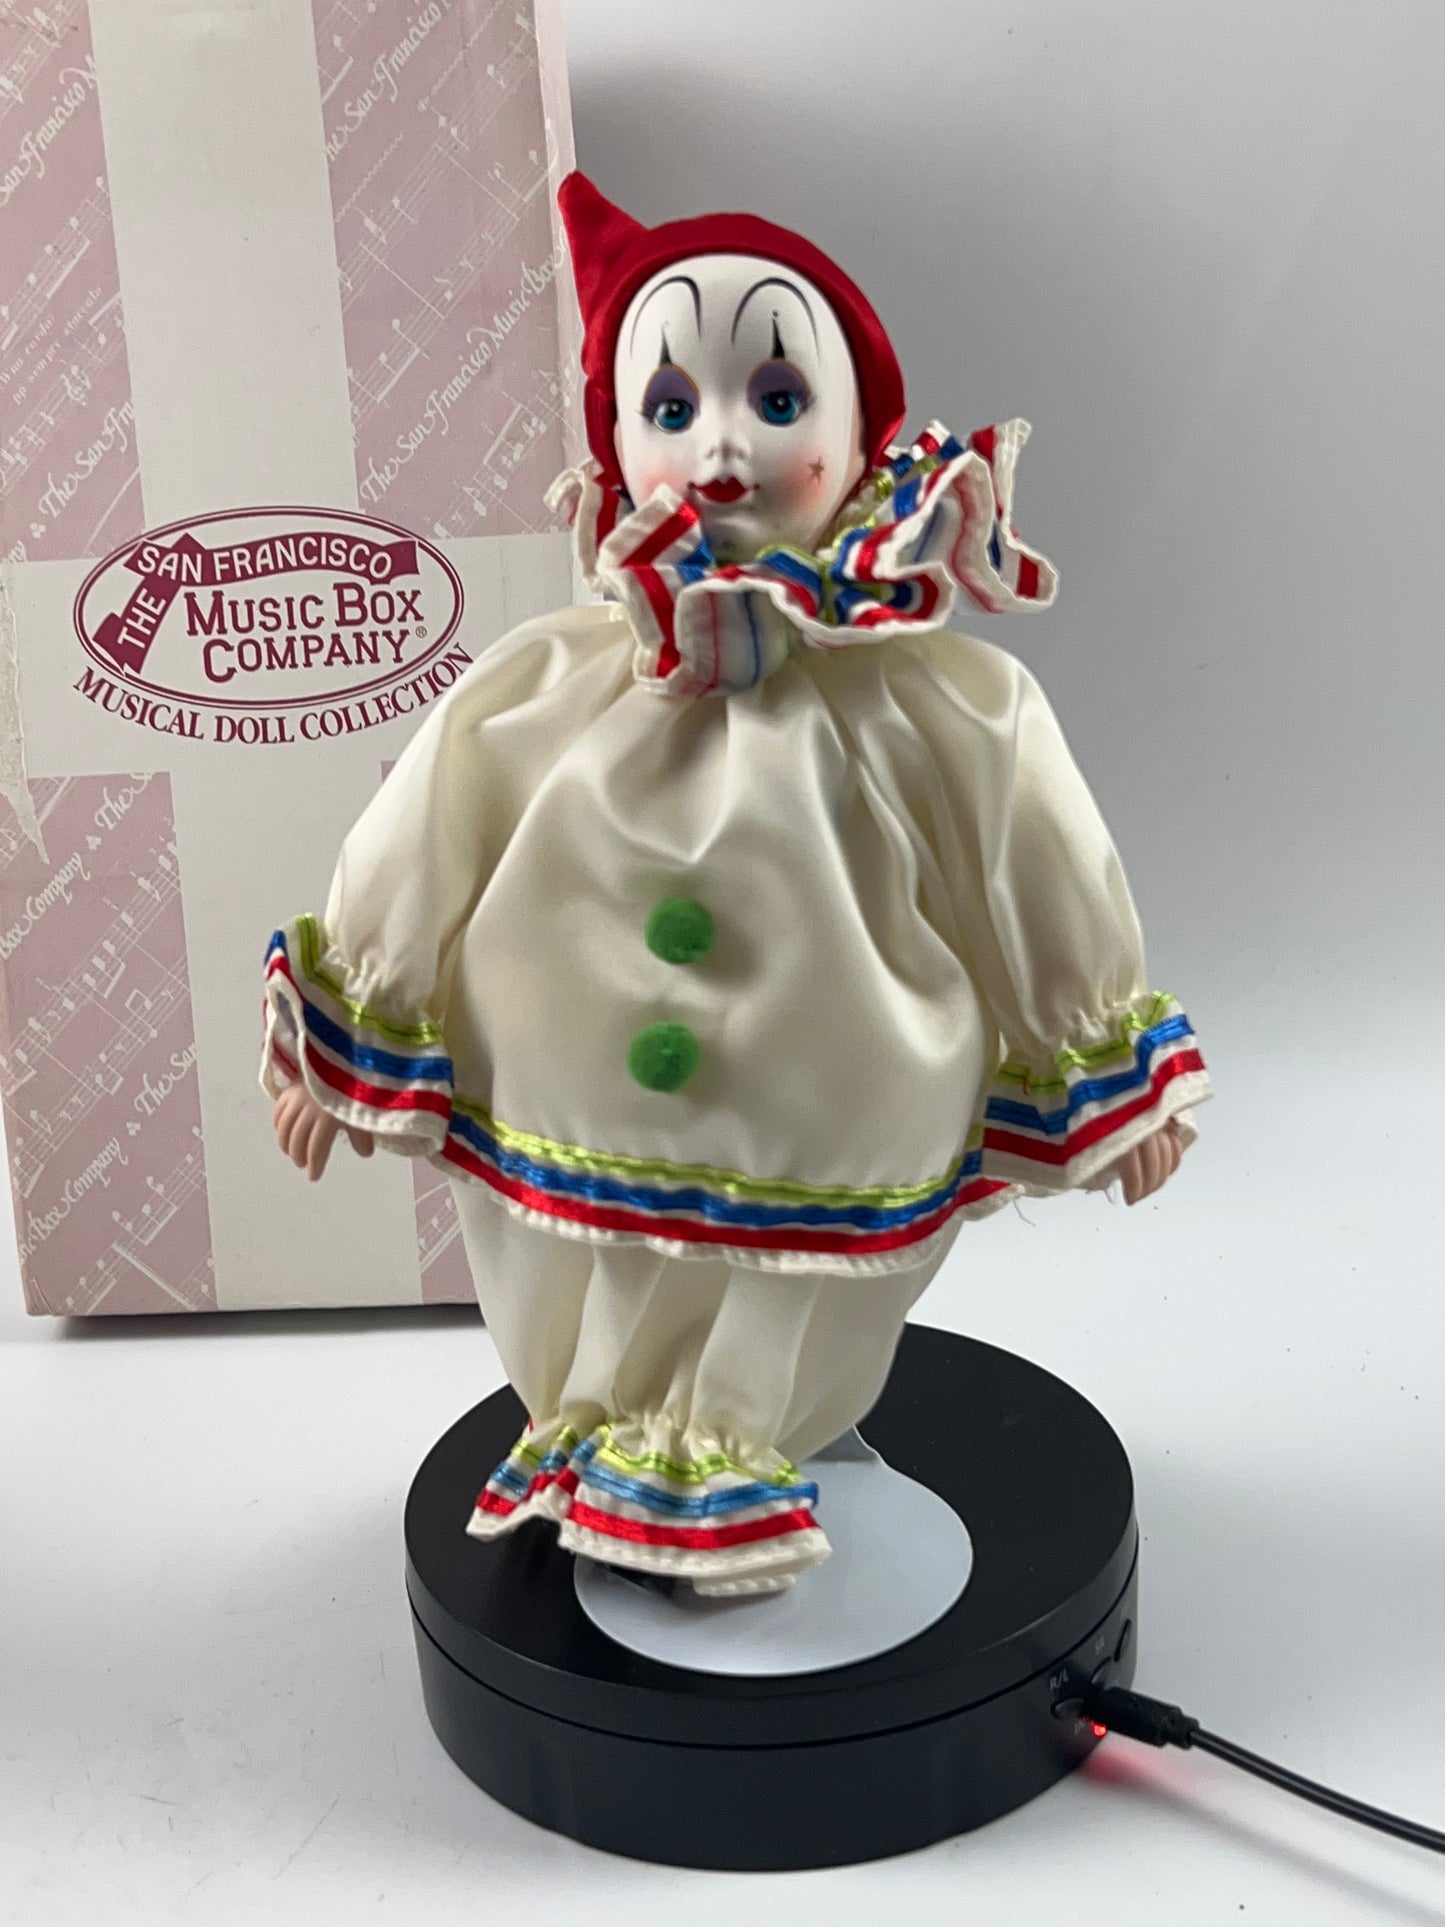 San Francisco Music Box Co Clown Figure Testé #19-4878